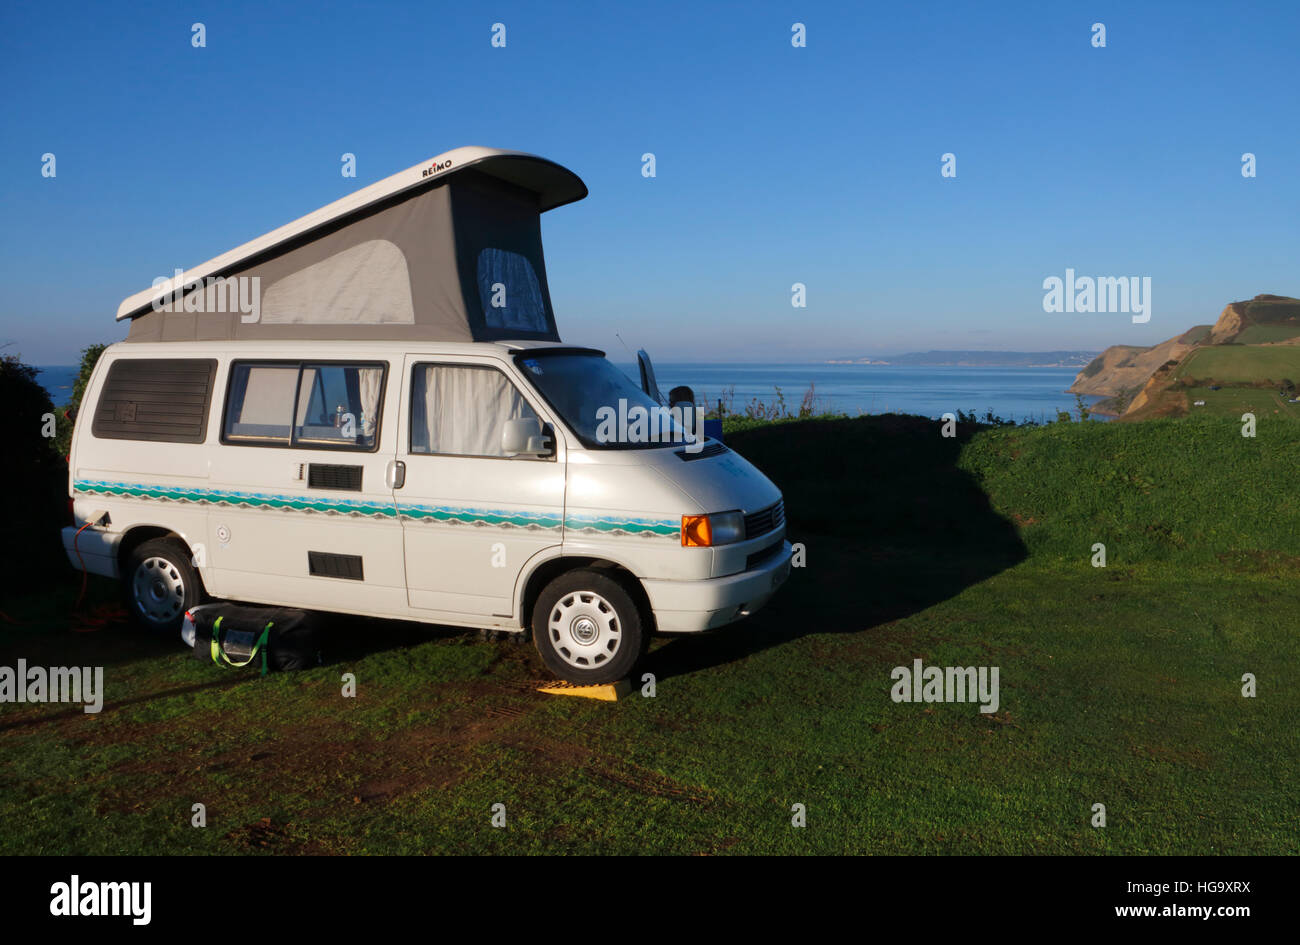 A Volkswagen T4 Transporter camper van at a campsite in Dorset, England  Stock Photo - Alamy